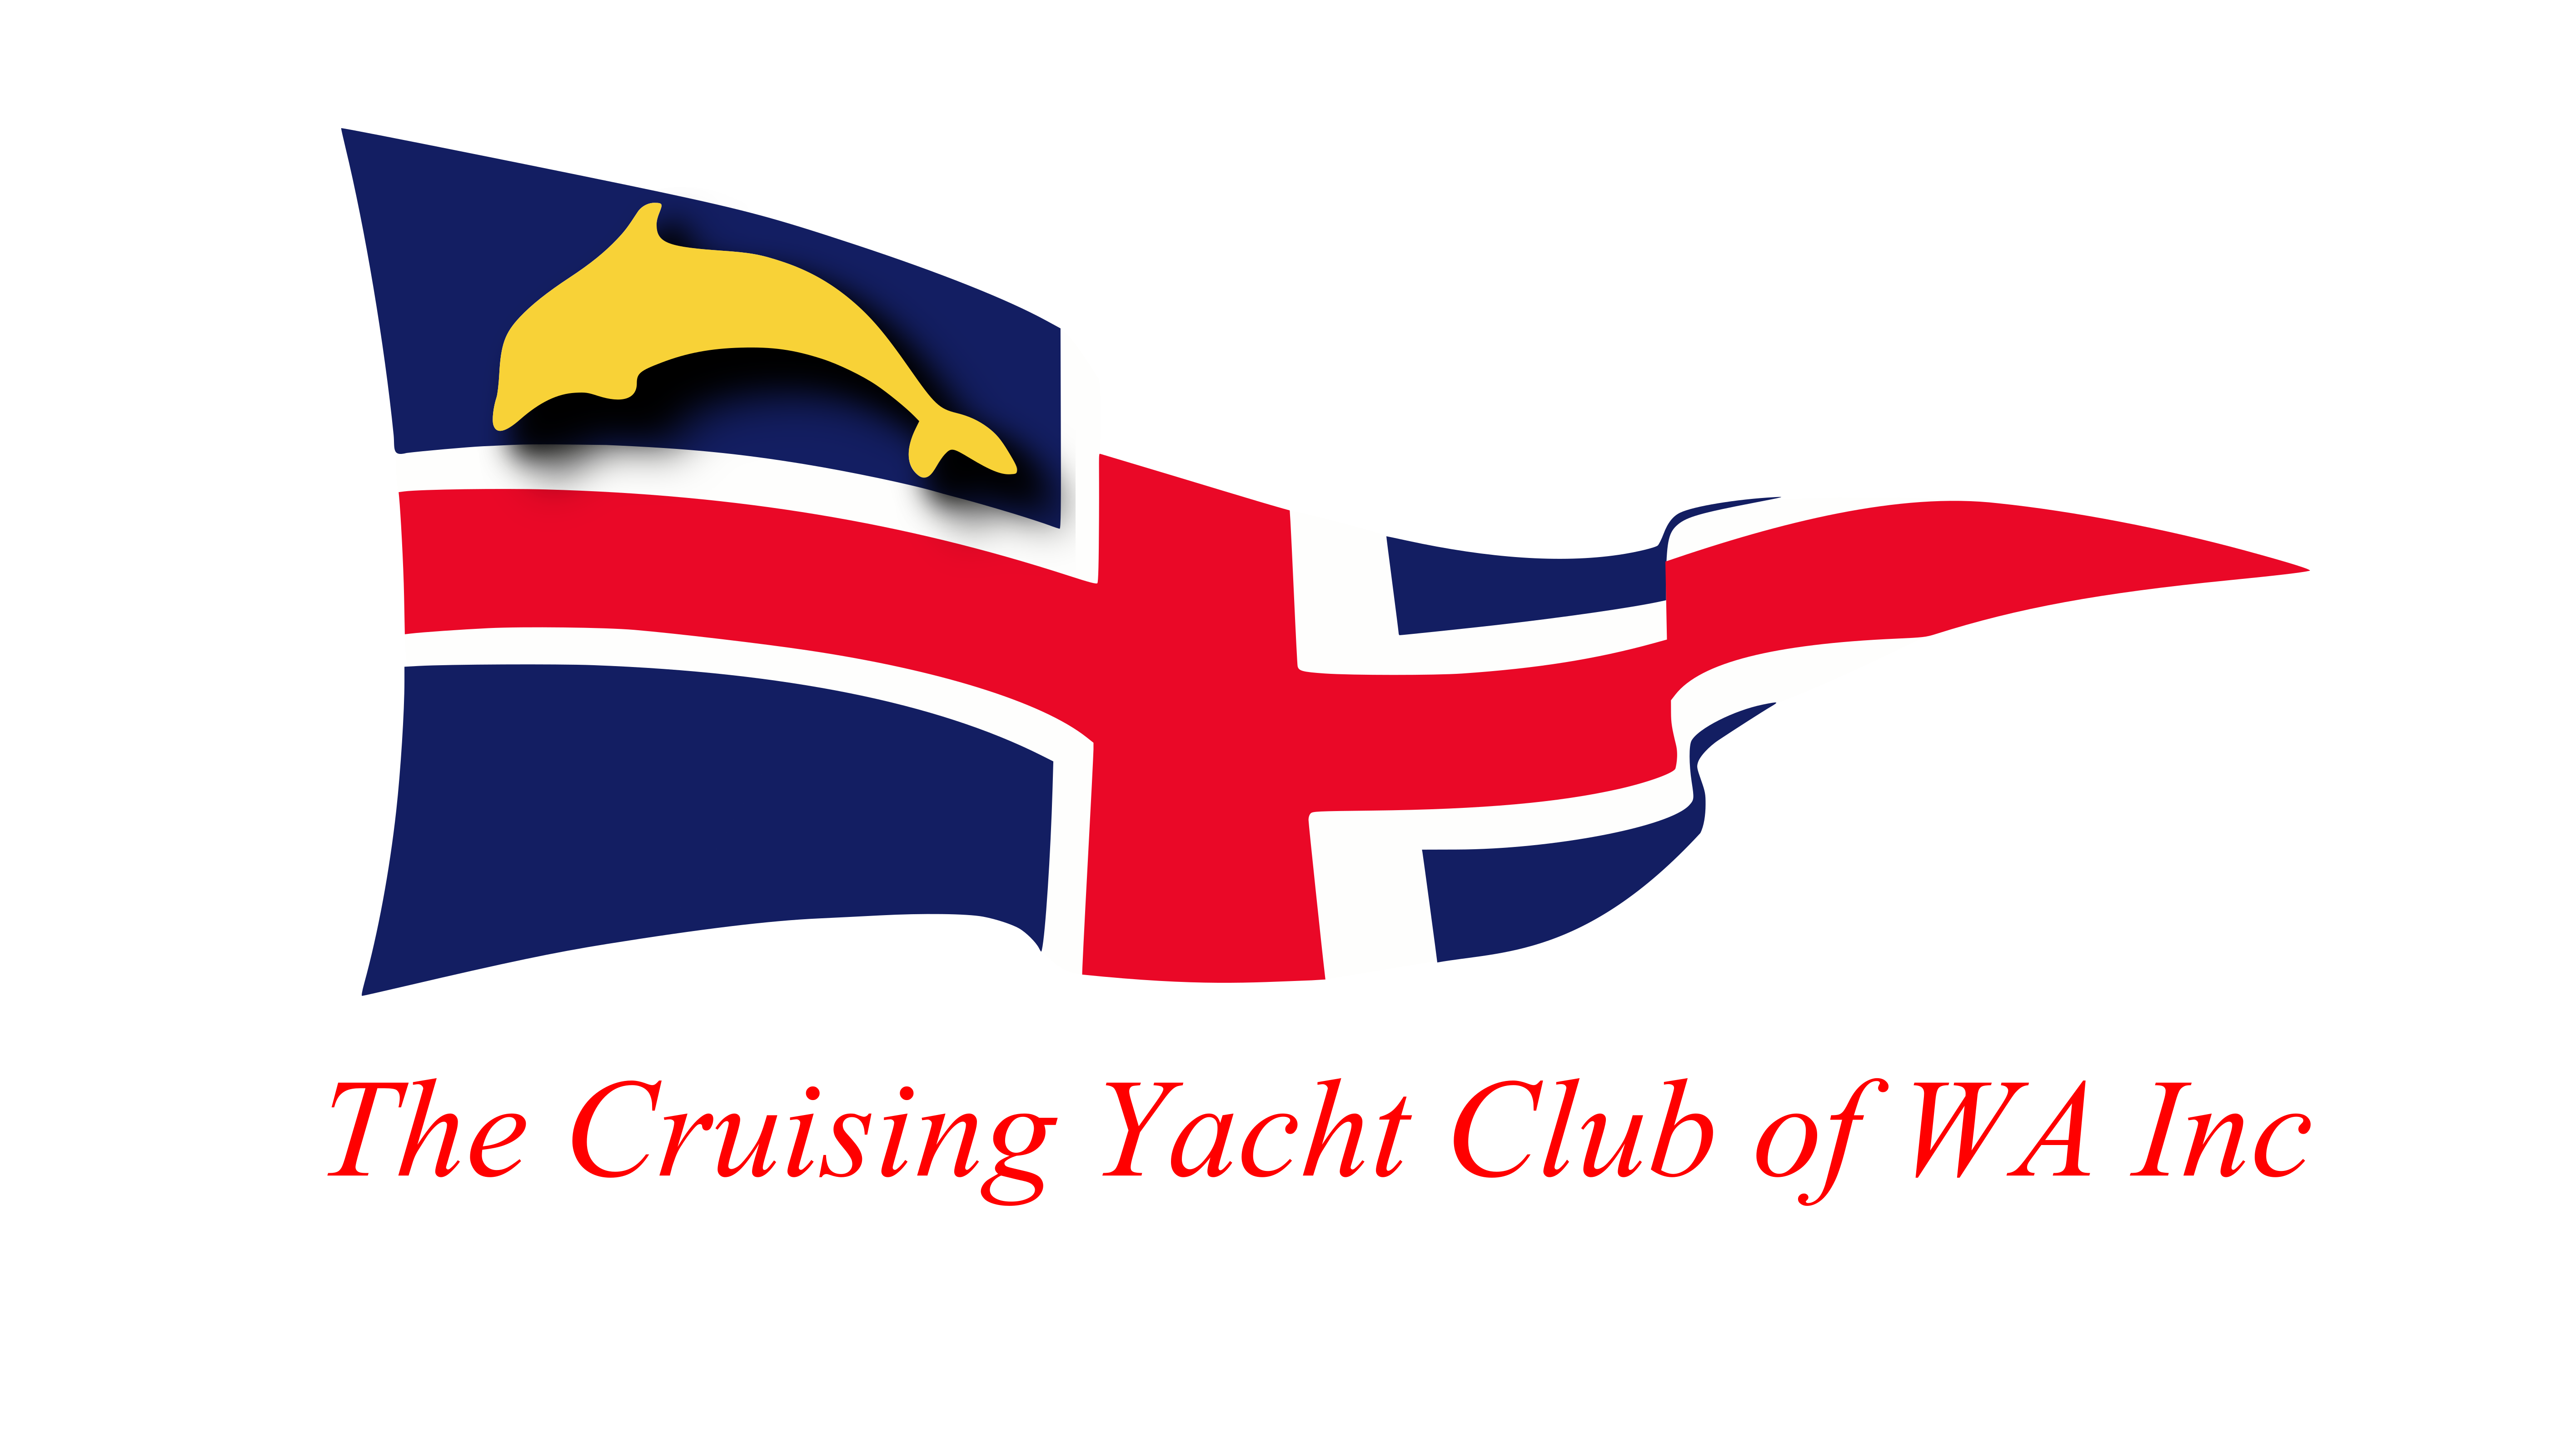 History of The Cruising Yacht Club of Western Australia (inc)